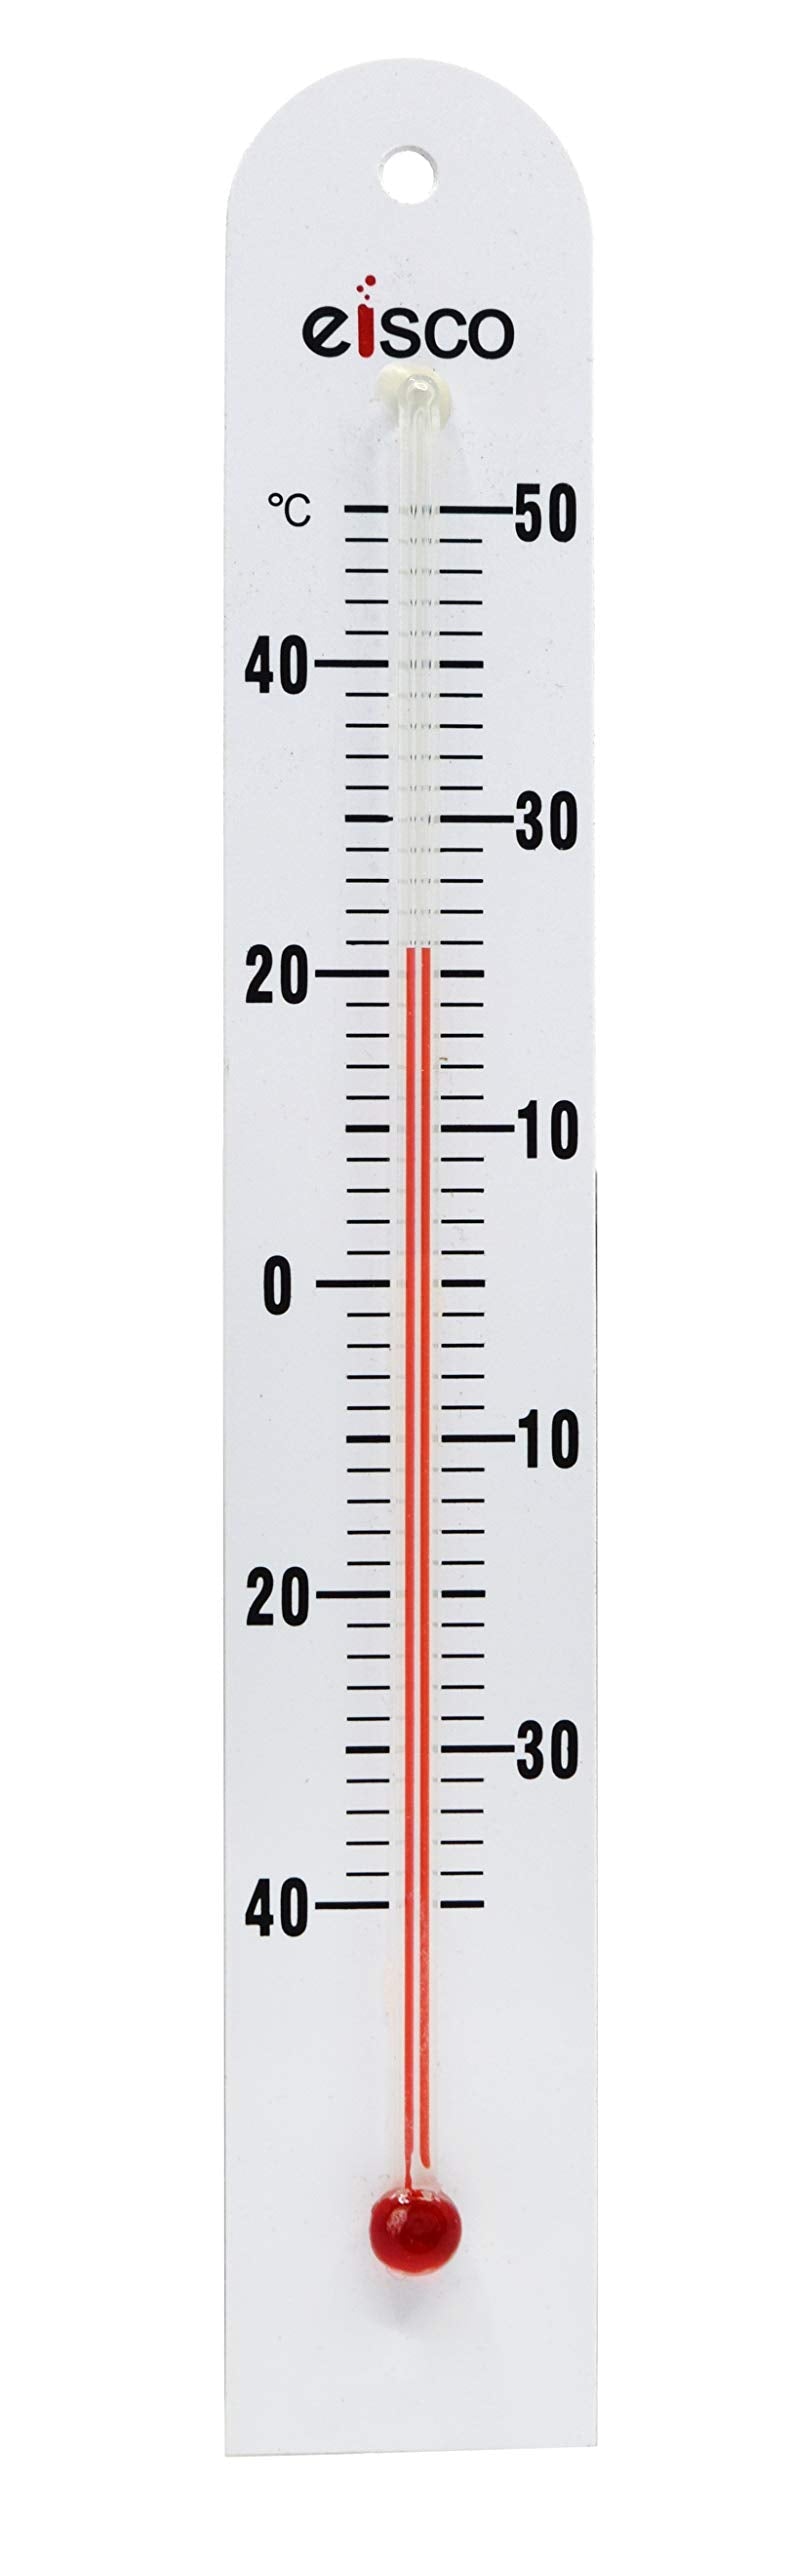 [Australia - AusPower] - PVC Thermometer, -40 to 50°C, White PVC Backing, Glass - Spirit Filled - 6.5" Long, 1" Wide - Eisco Labs Single 